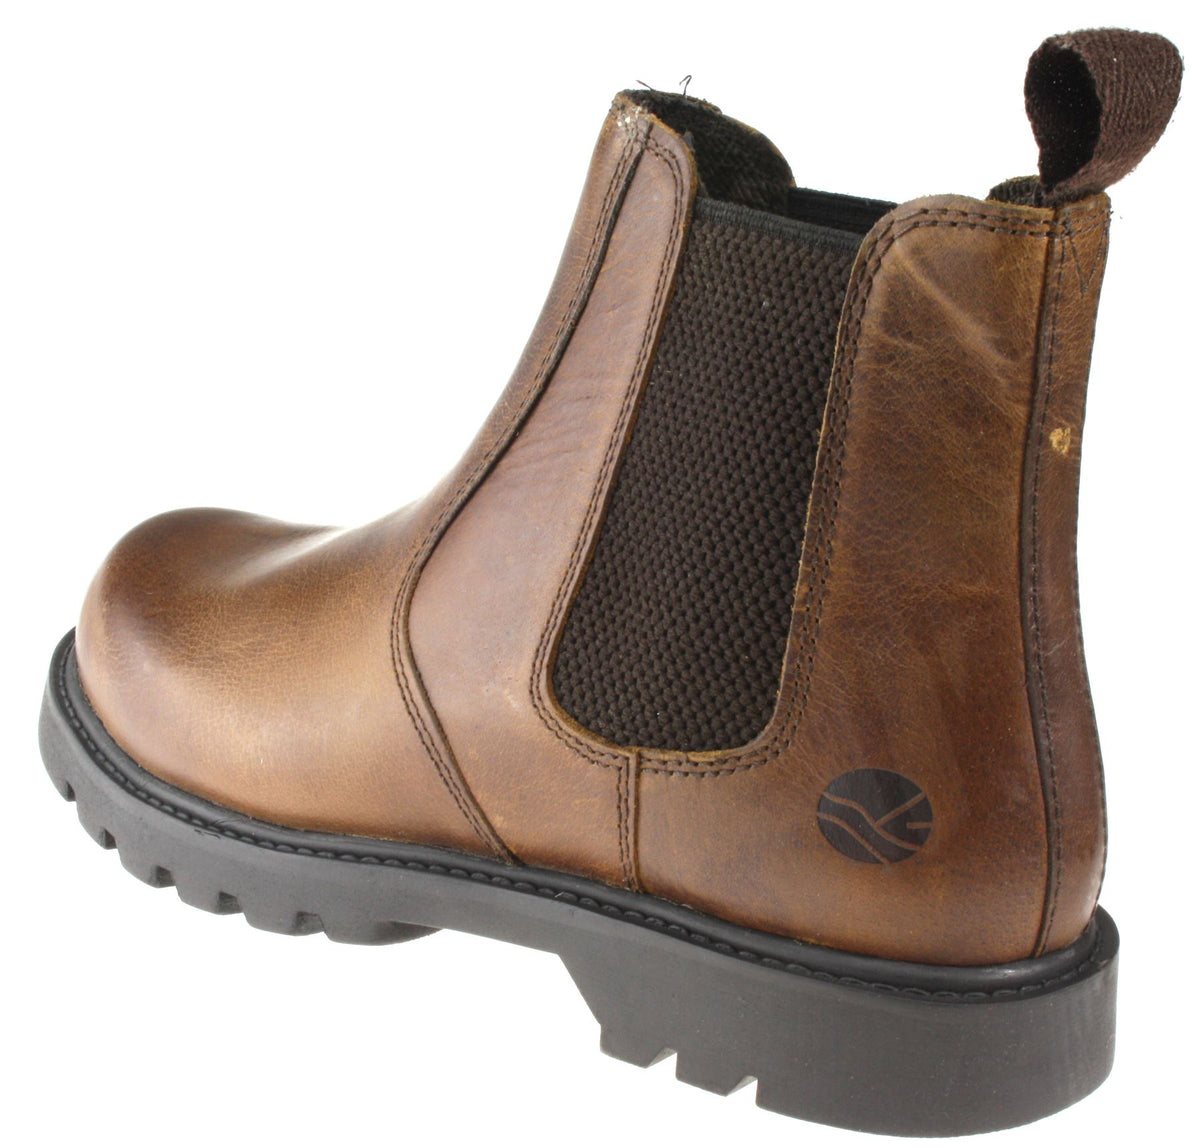 Oaktrak Rocksley Leather Pull On Chelsea Dealer Boots